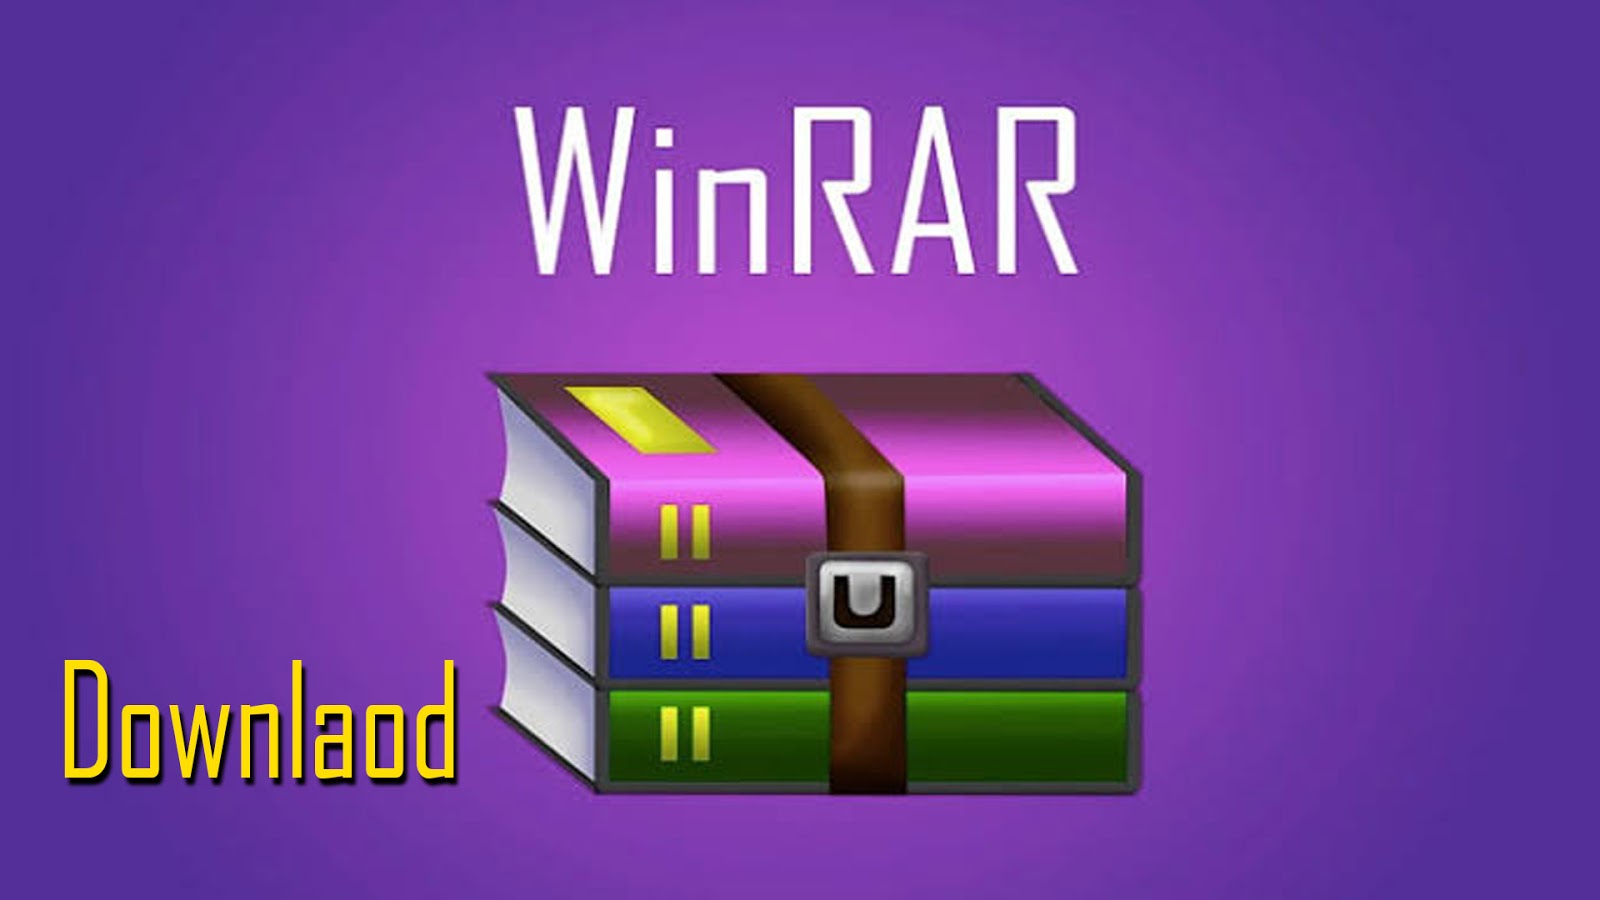 winrar free download for windows 8.1 64 bit cnet